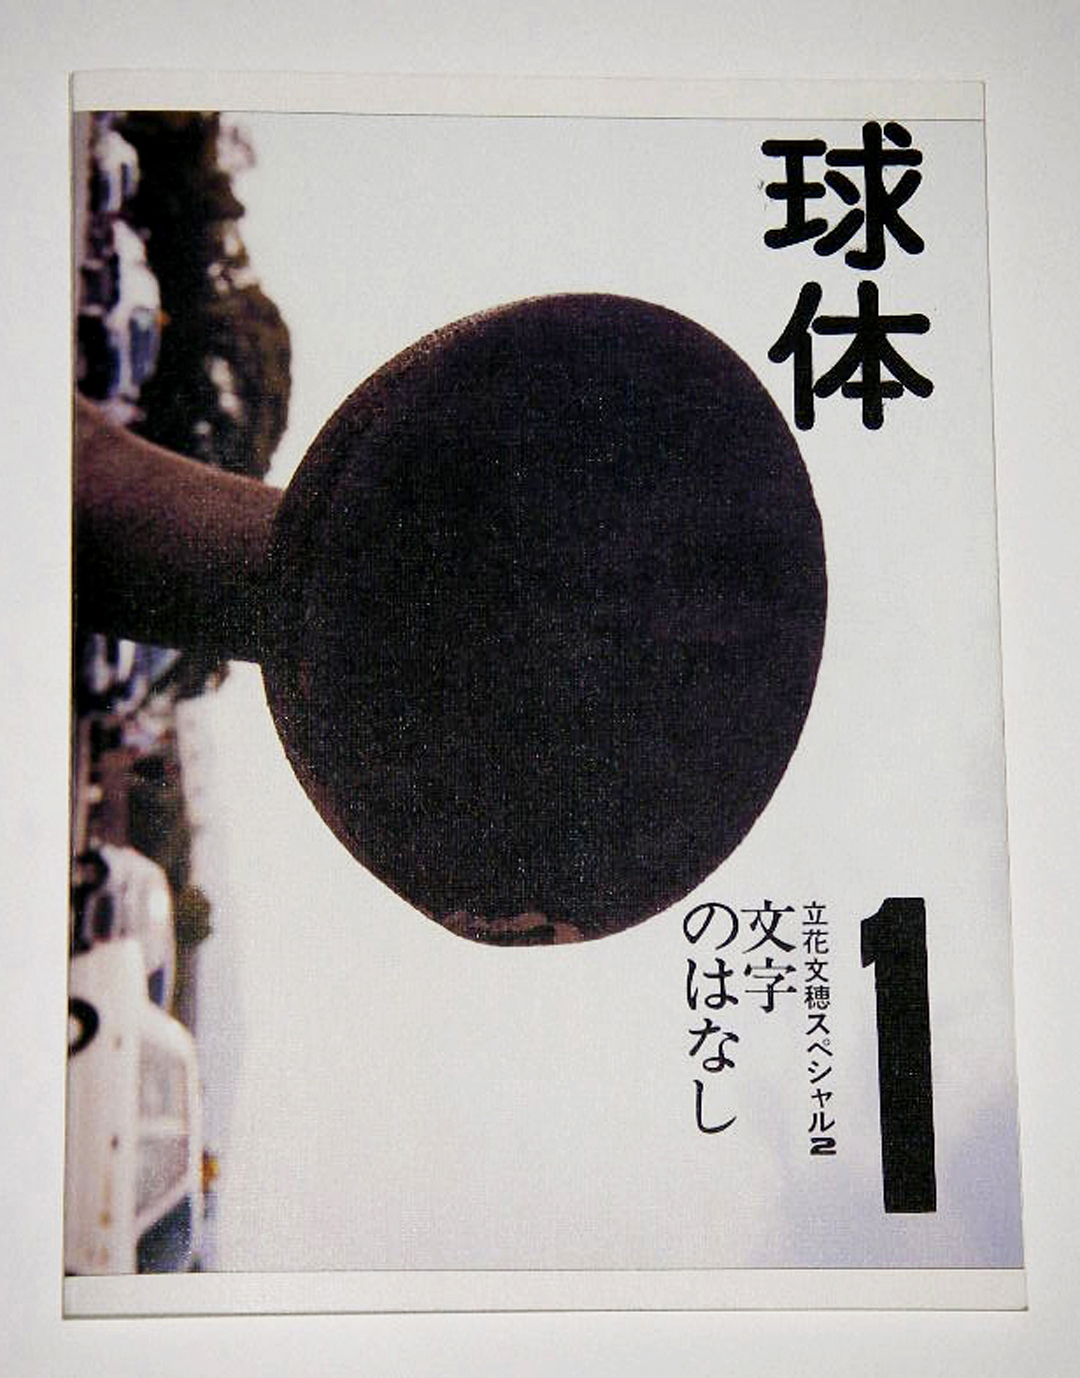 水戸芸術館で「立花文穂展 印象 IT'S ONLY A PAPER MOON」が開催。作家